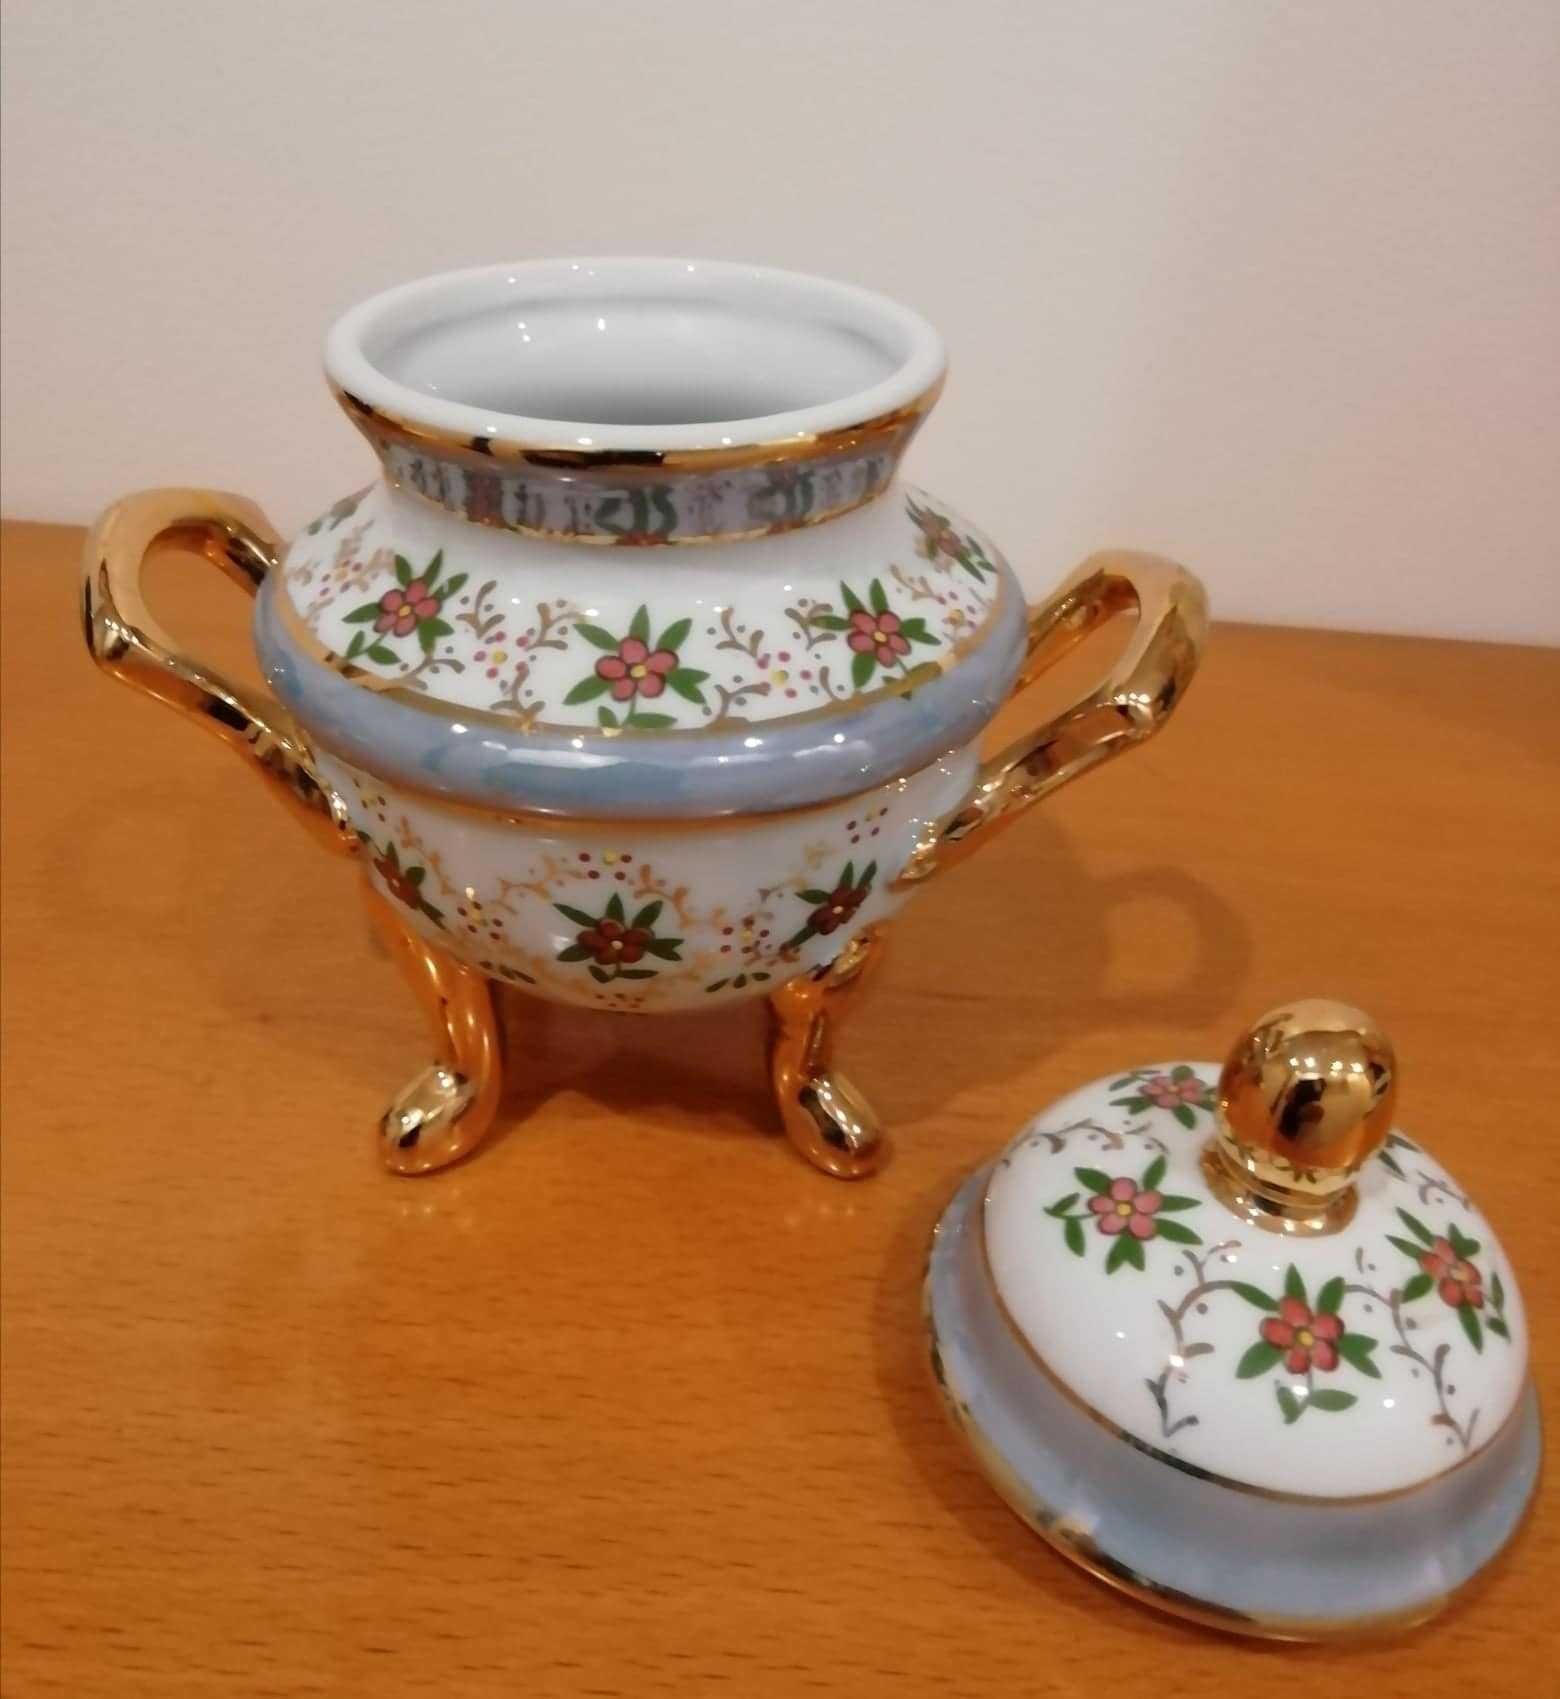 Peça Decorativa Royal Porcelain